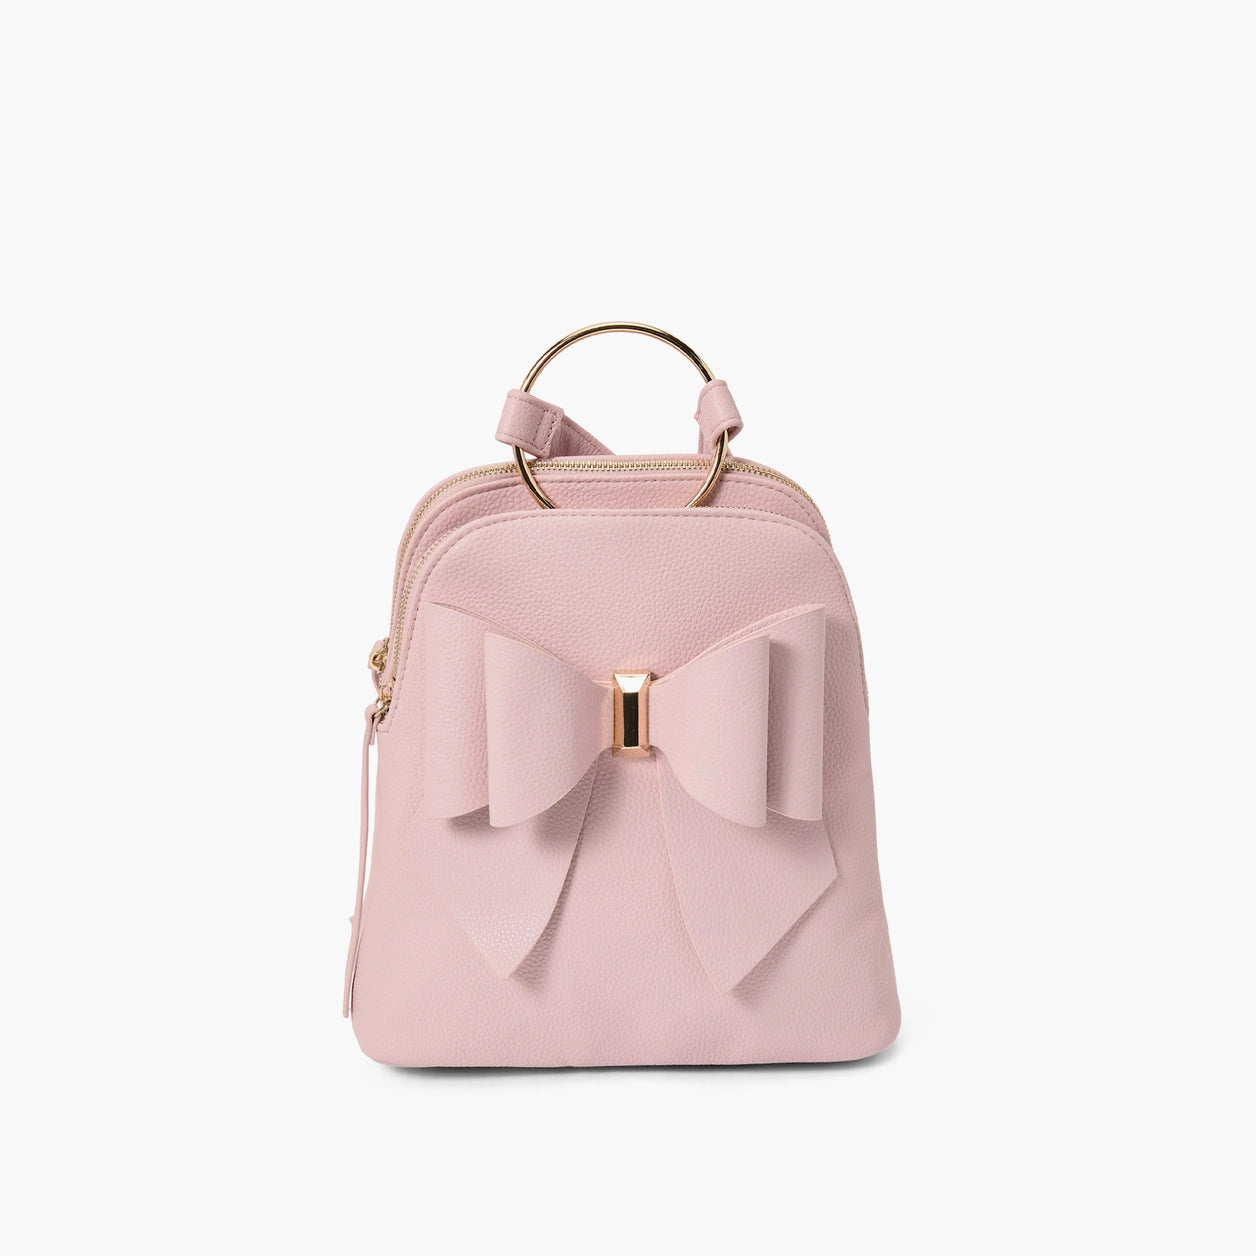 Jasmine Bowtie Backpack Handbag Blush